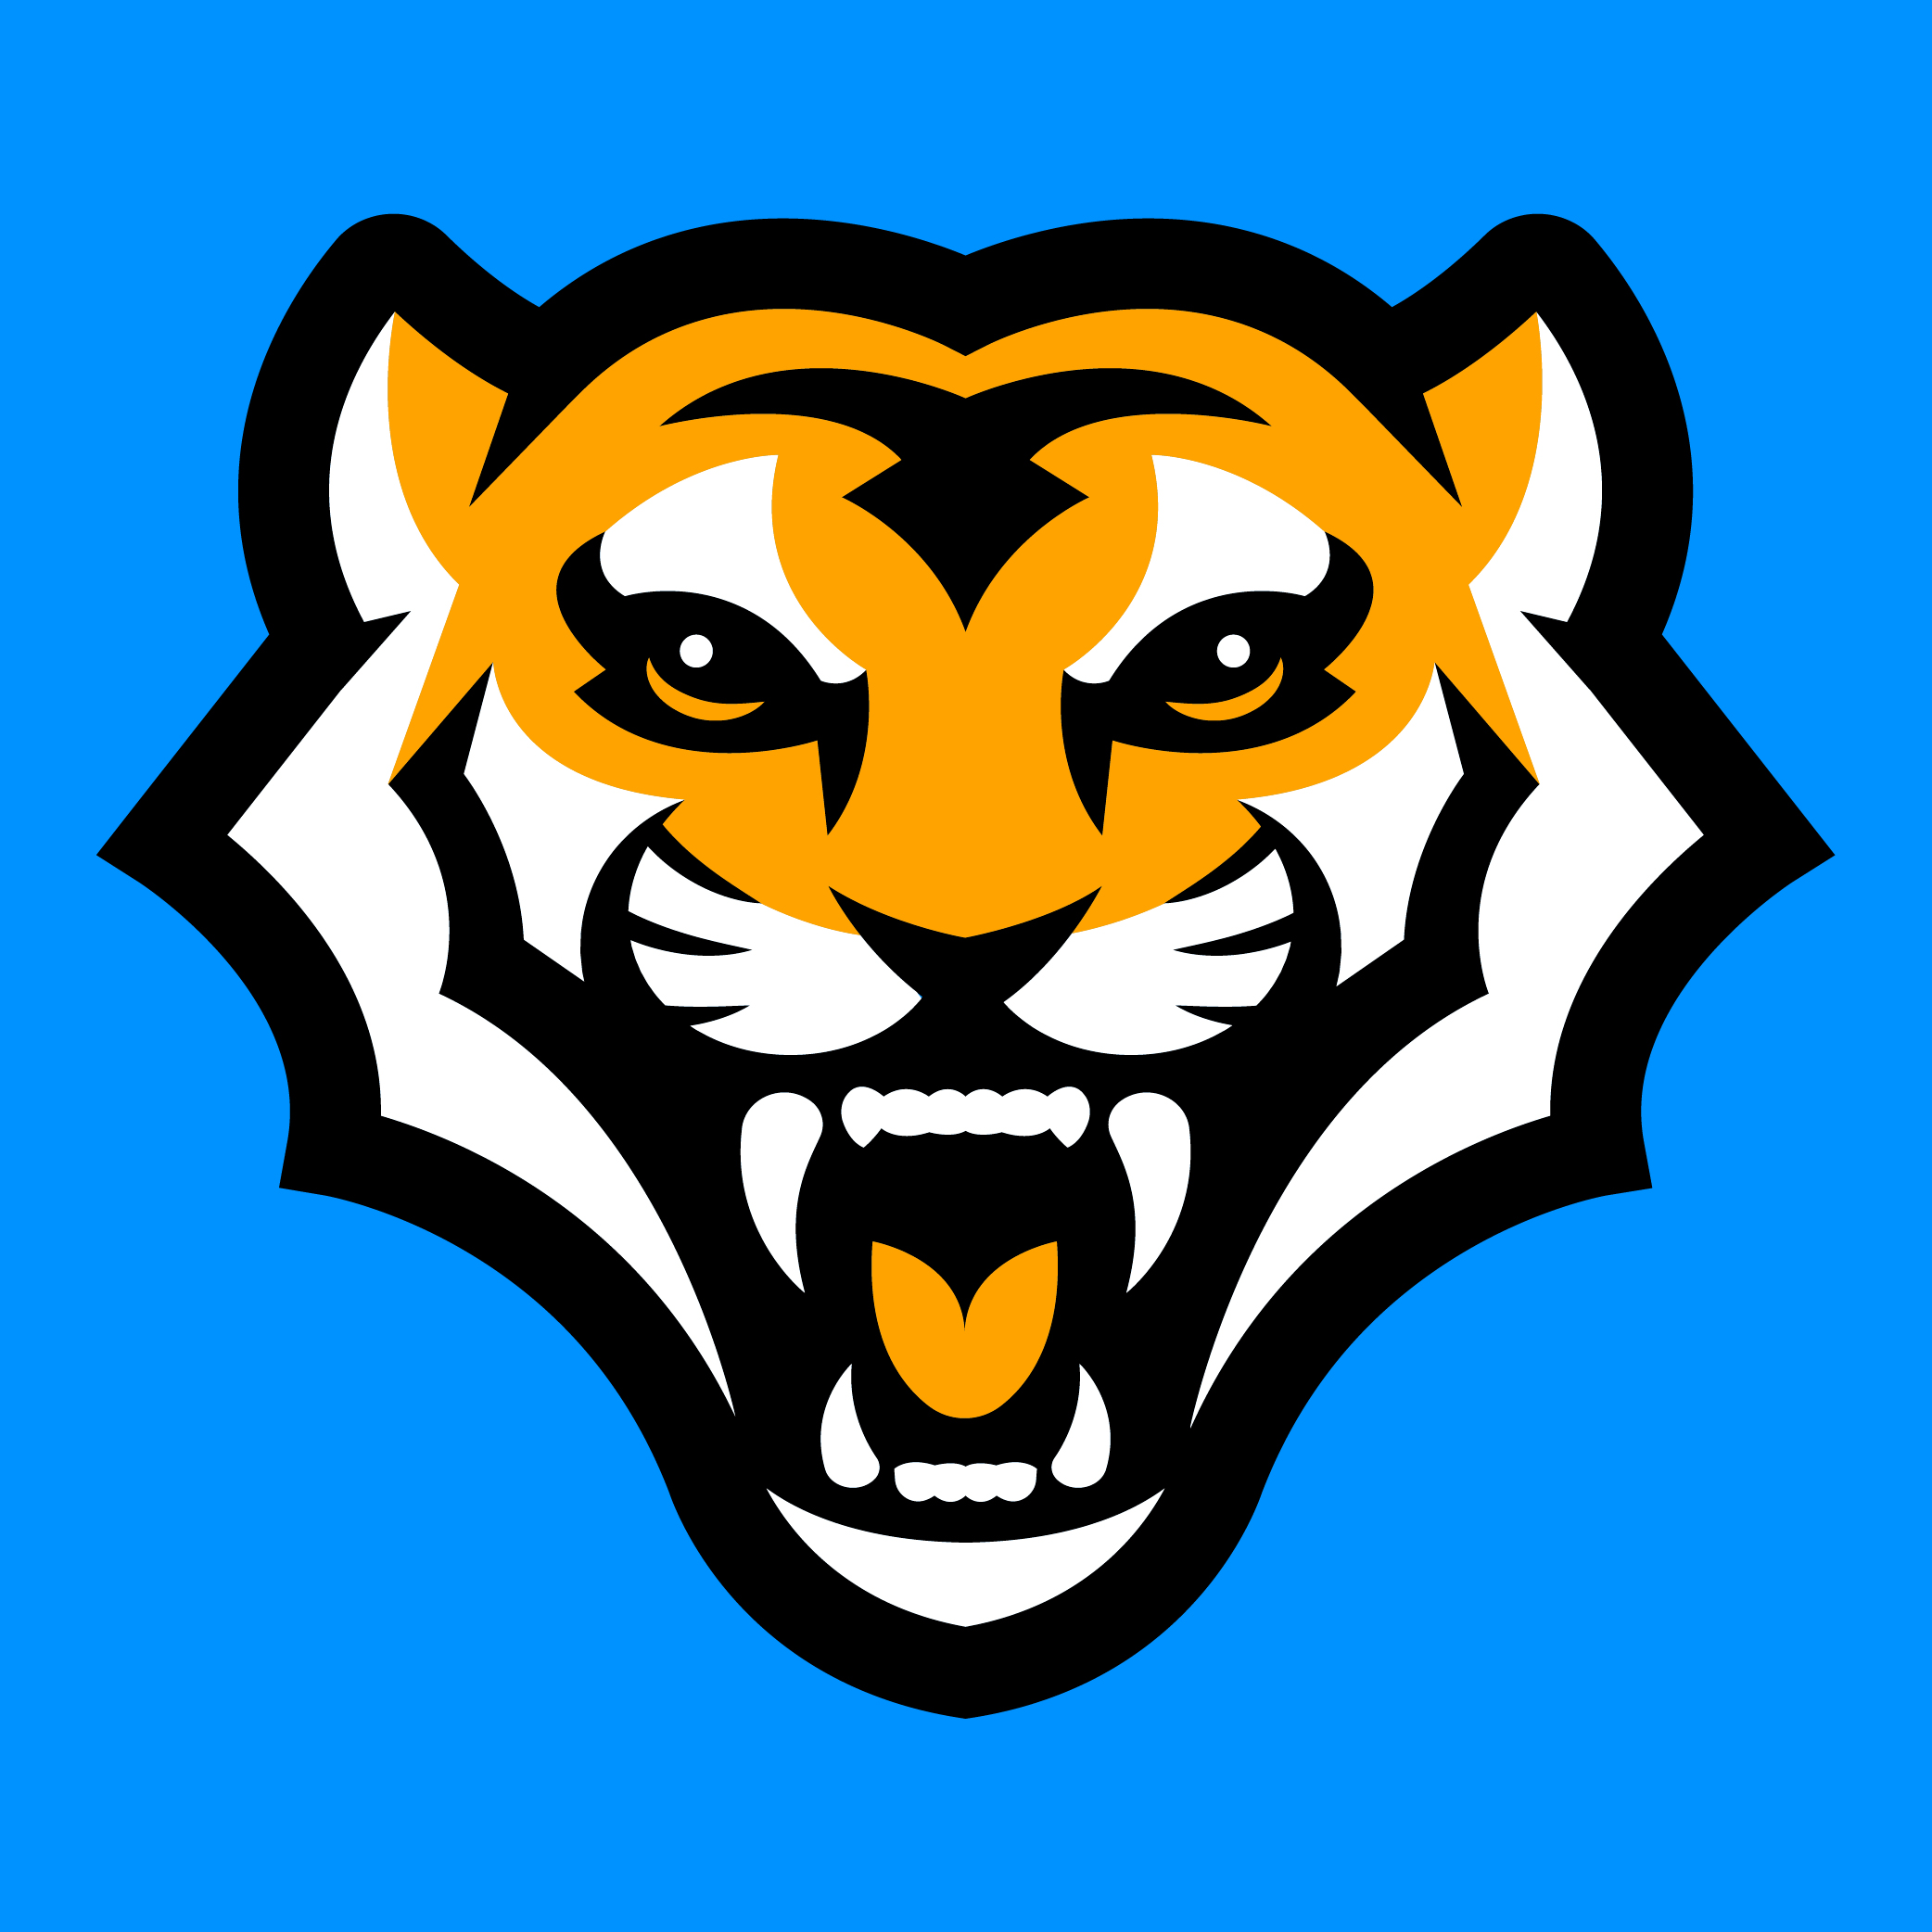 tiger mascot logo for sale Streamer overlays premade mascot esports logos for sale